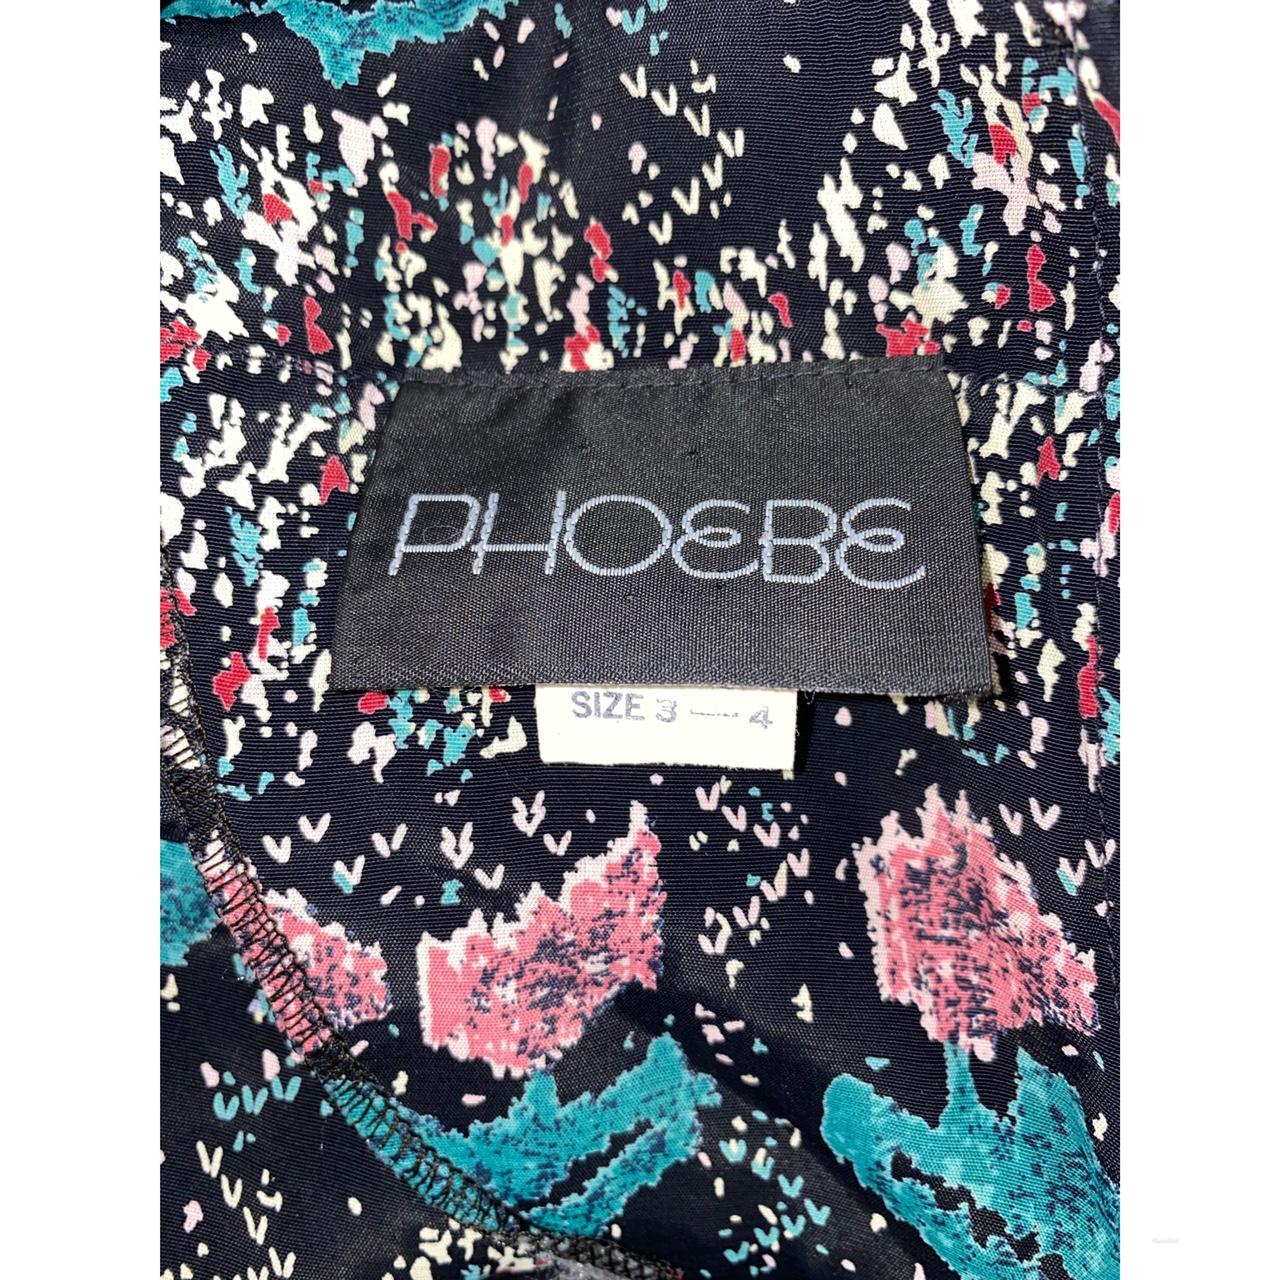 Phoebe English Women's Dress (4)